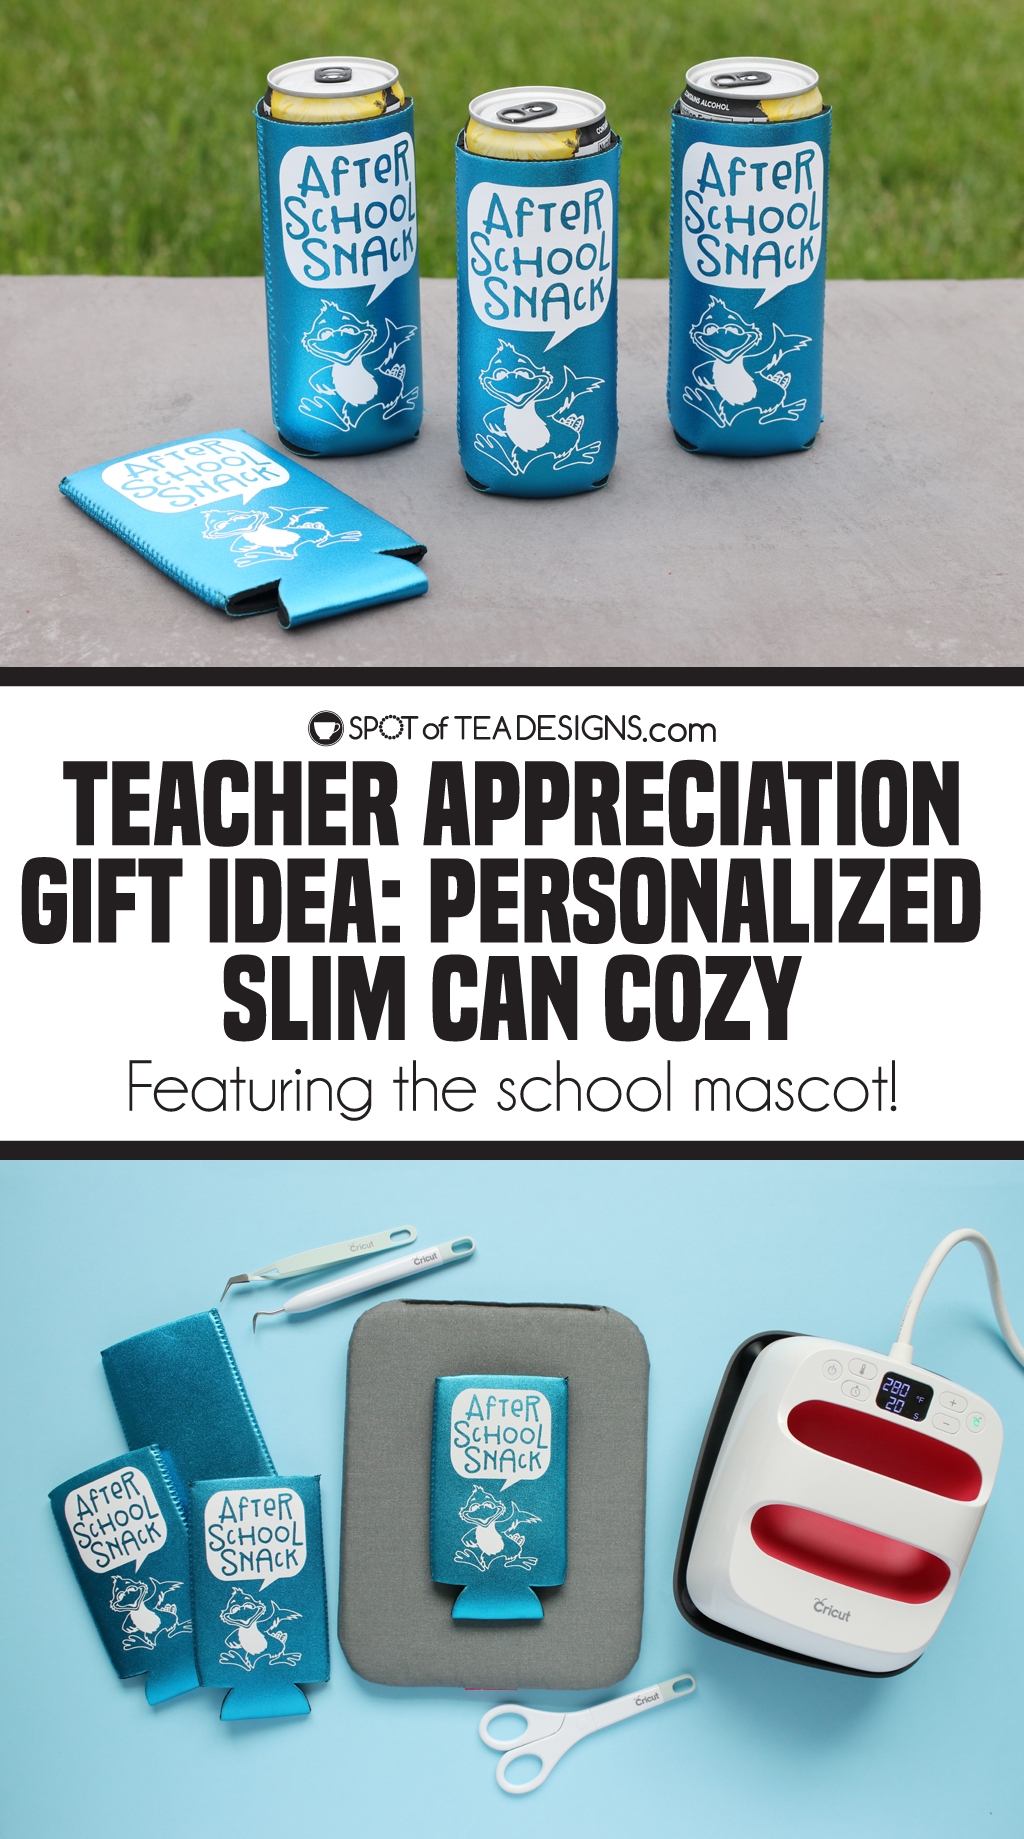 https://spotofteadesigns.com/wp-content/uploads/2020/05/Teacher-Appreciation-Gift-Slim-Can-Cozy-title.jpg